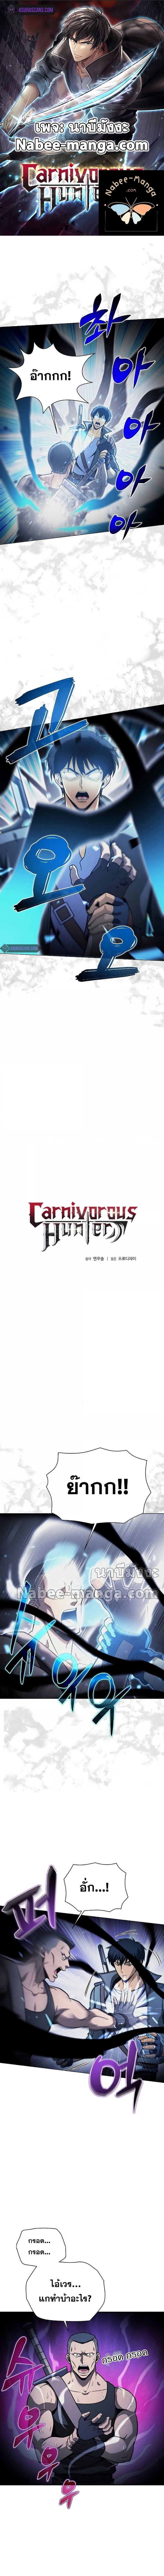 Carnivorous Hunter 39 (1)